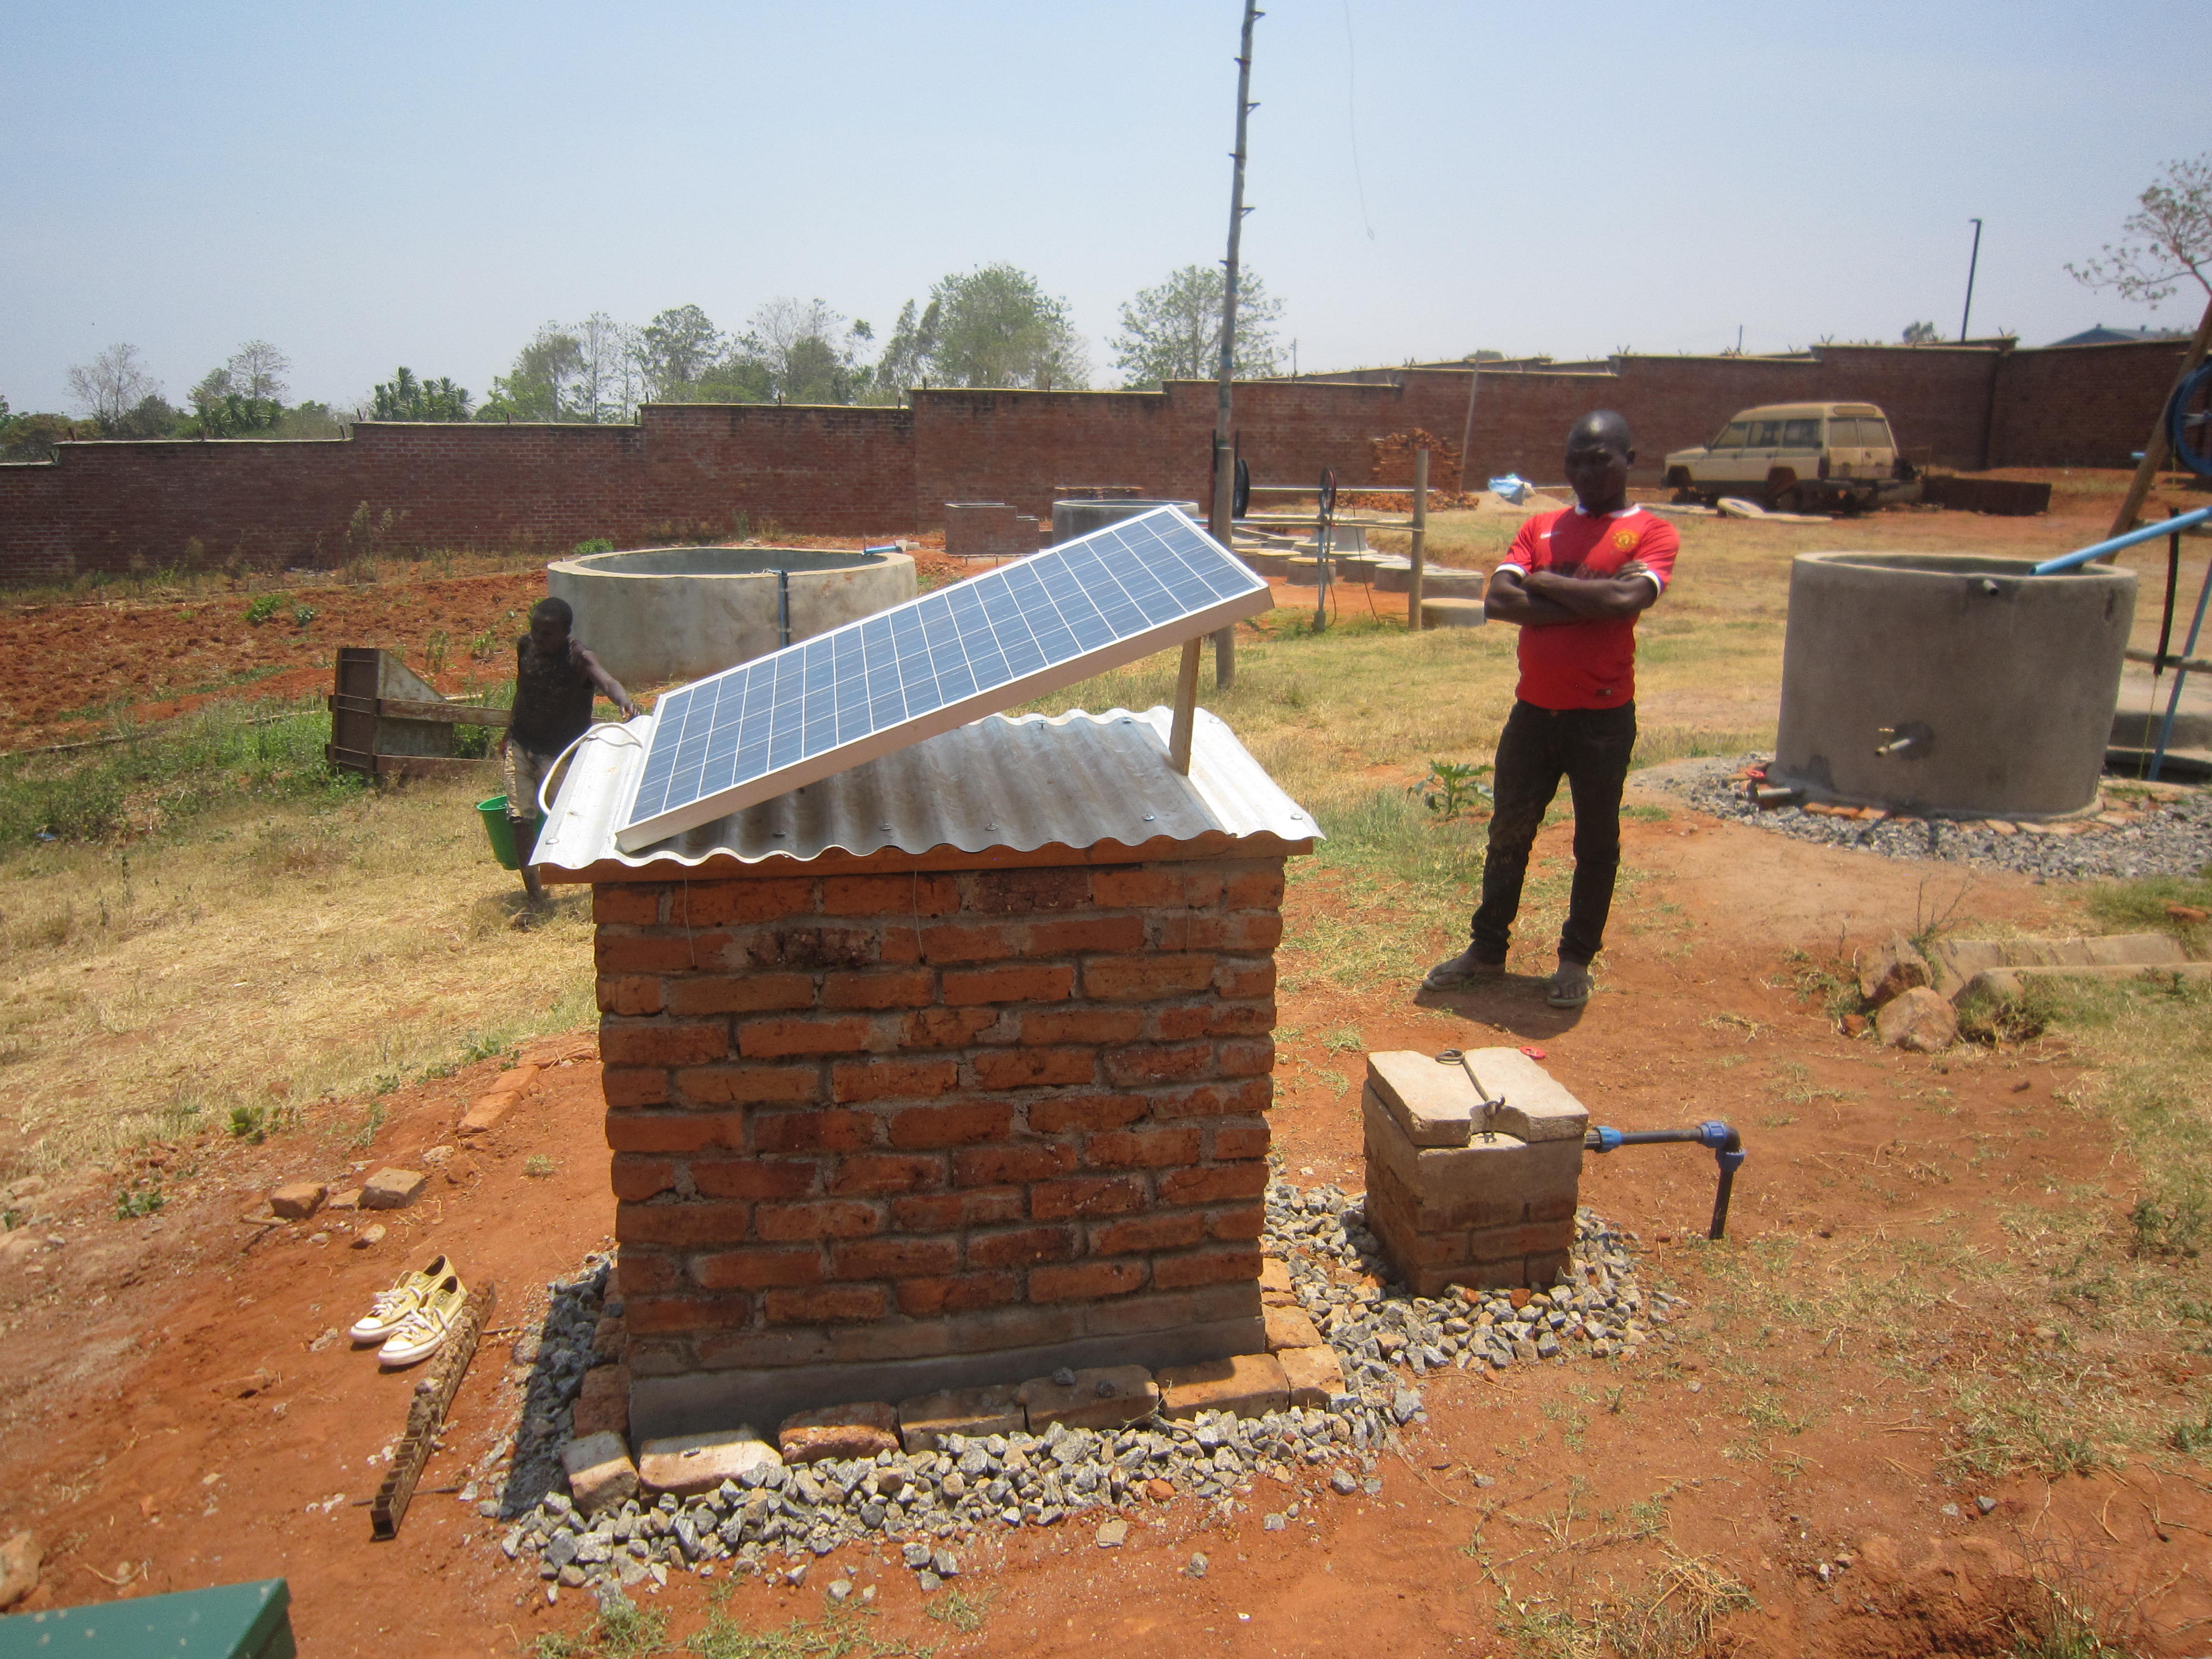 A water pump using solar power